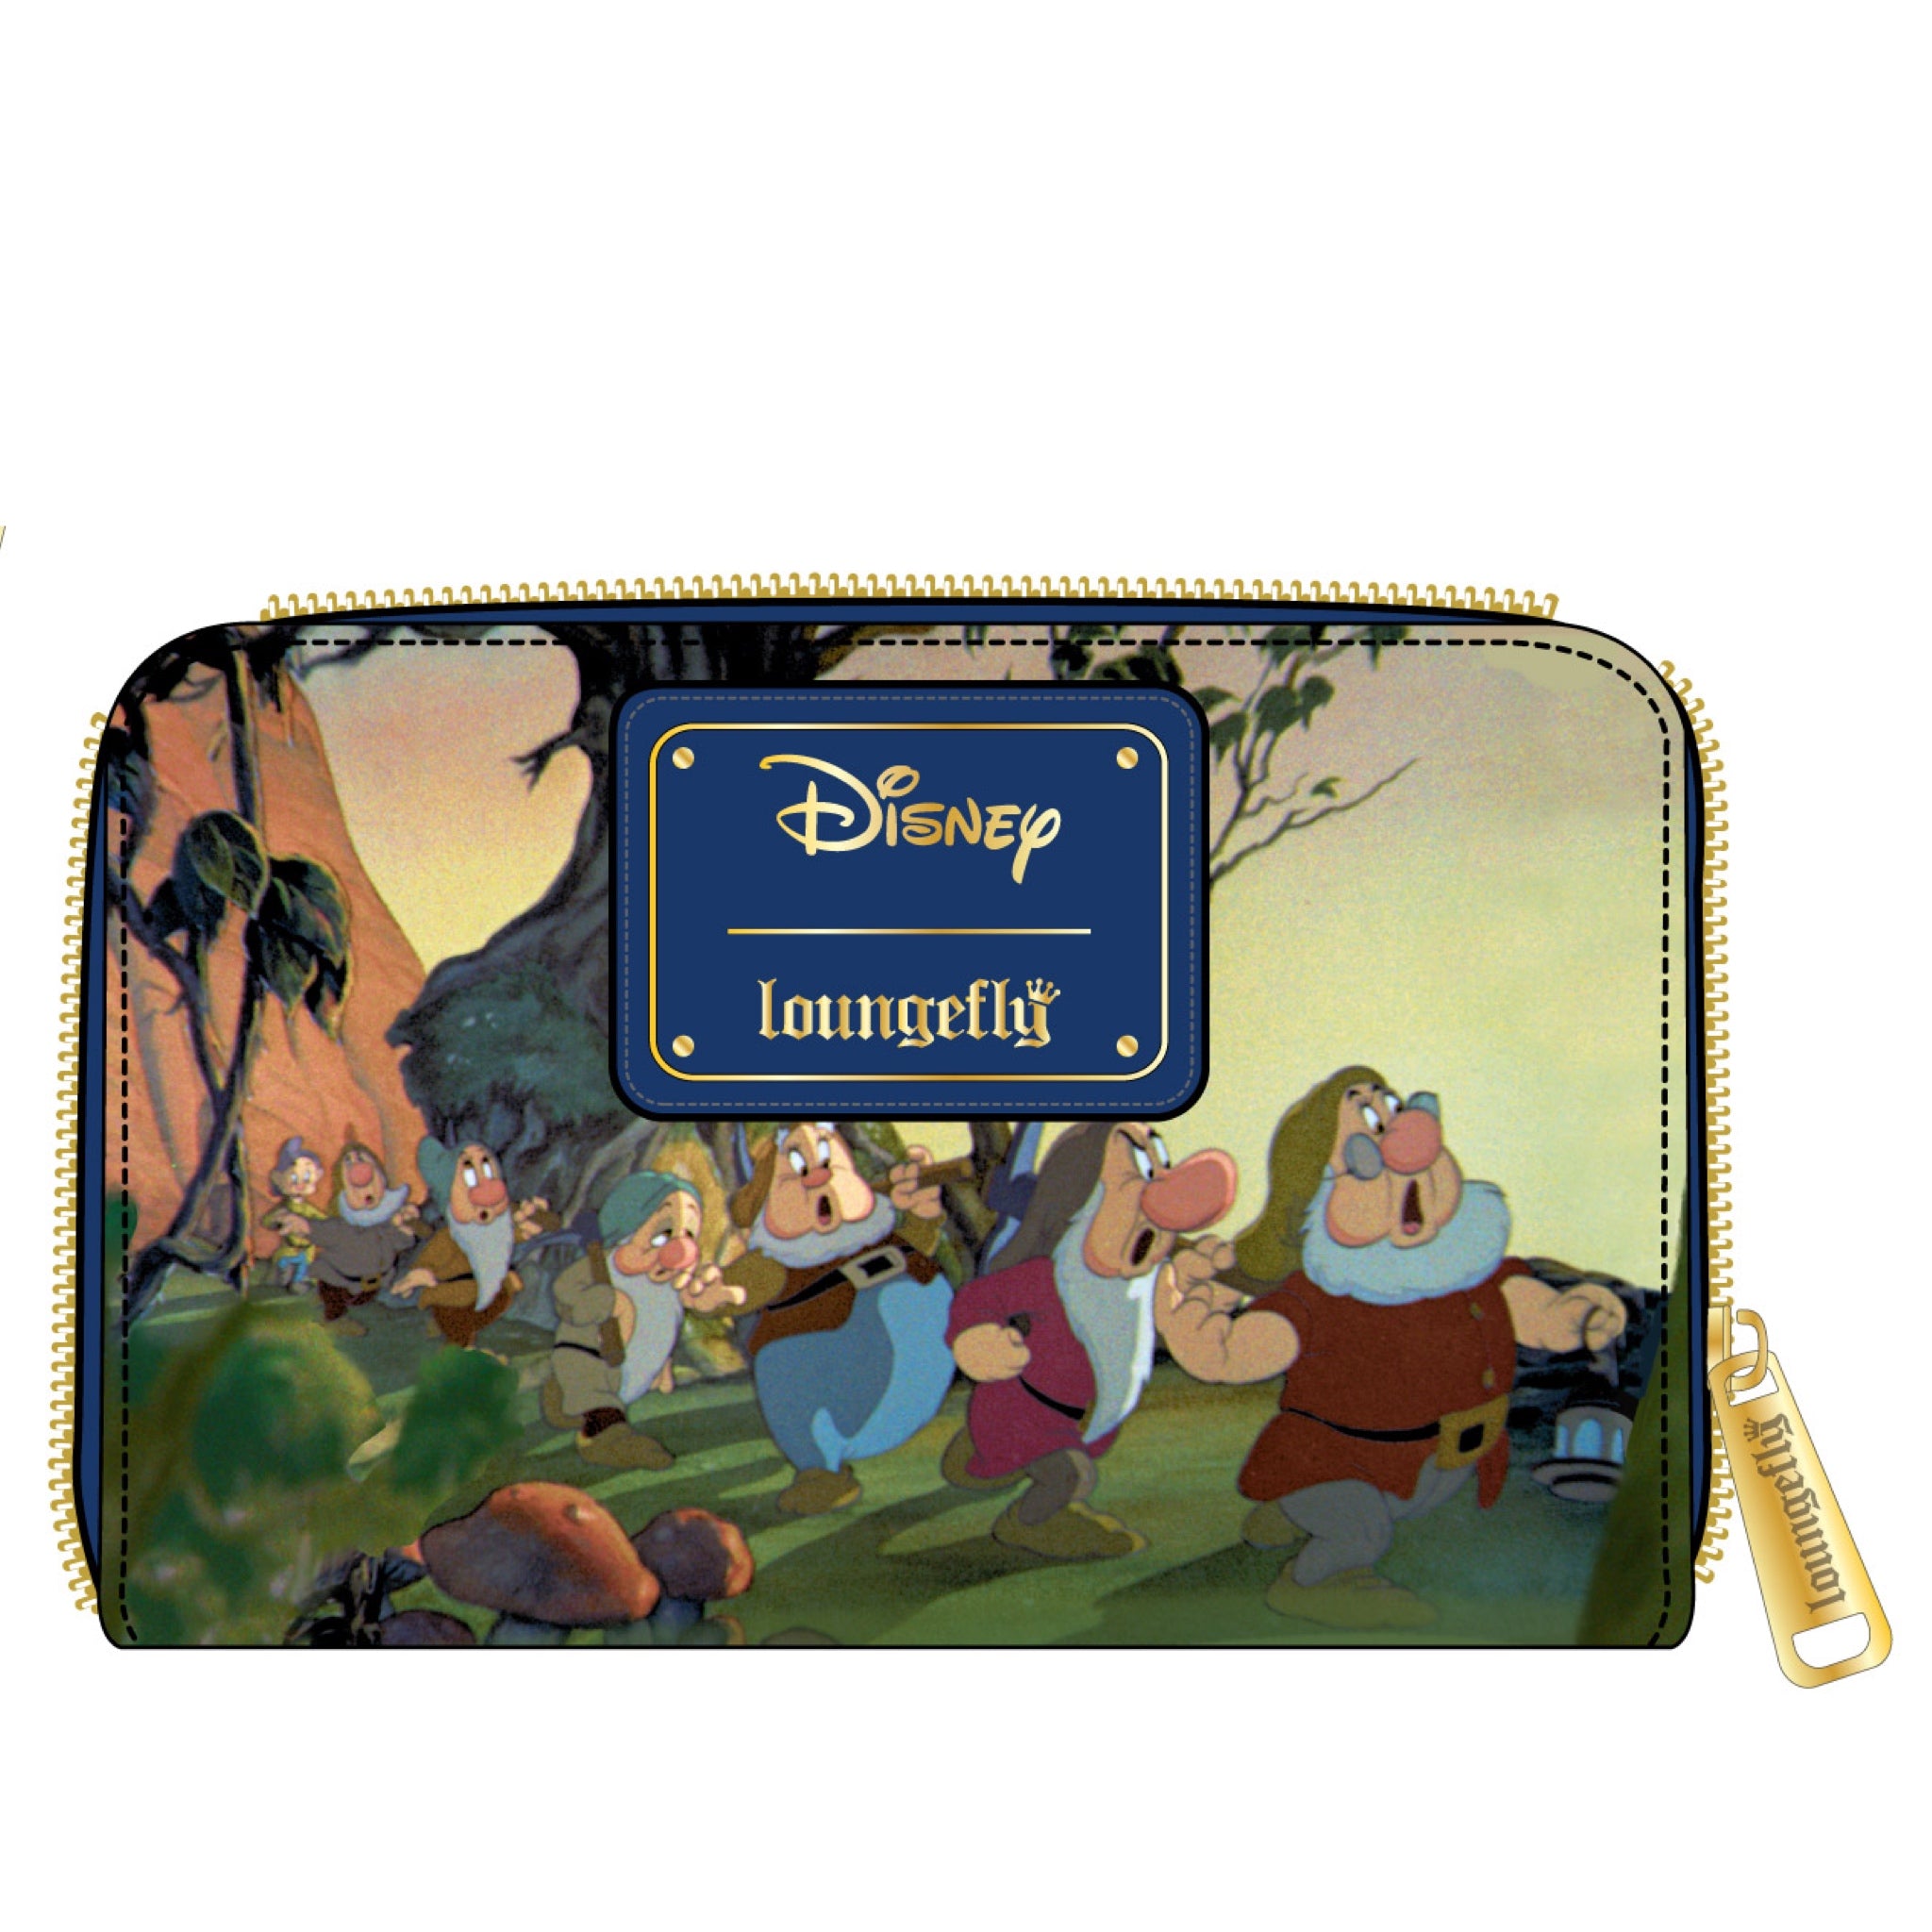 Disney Princess Snow White and the Seven Dwarfs Storybook Wallet